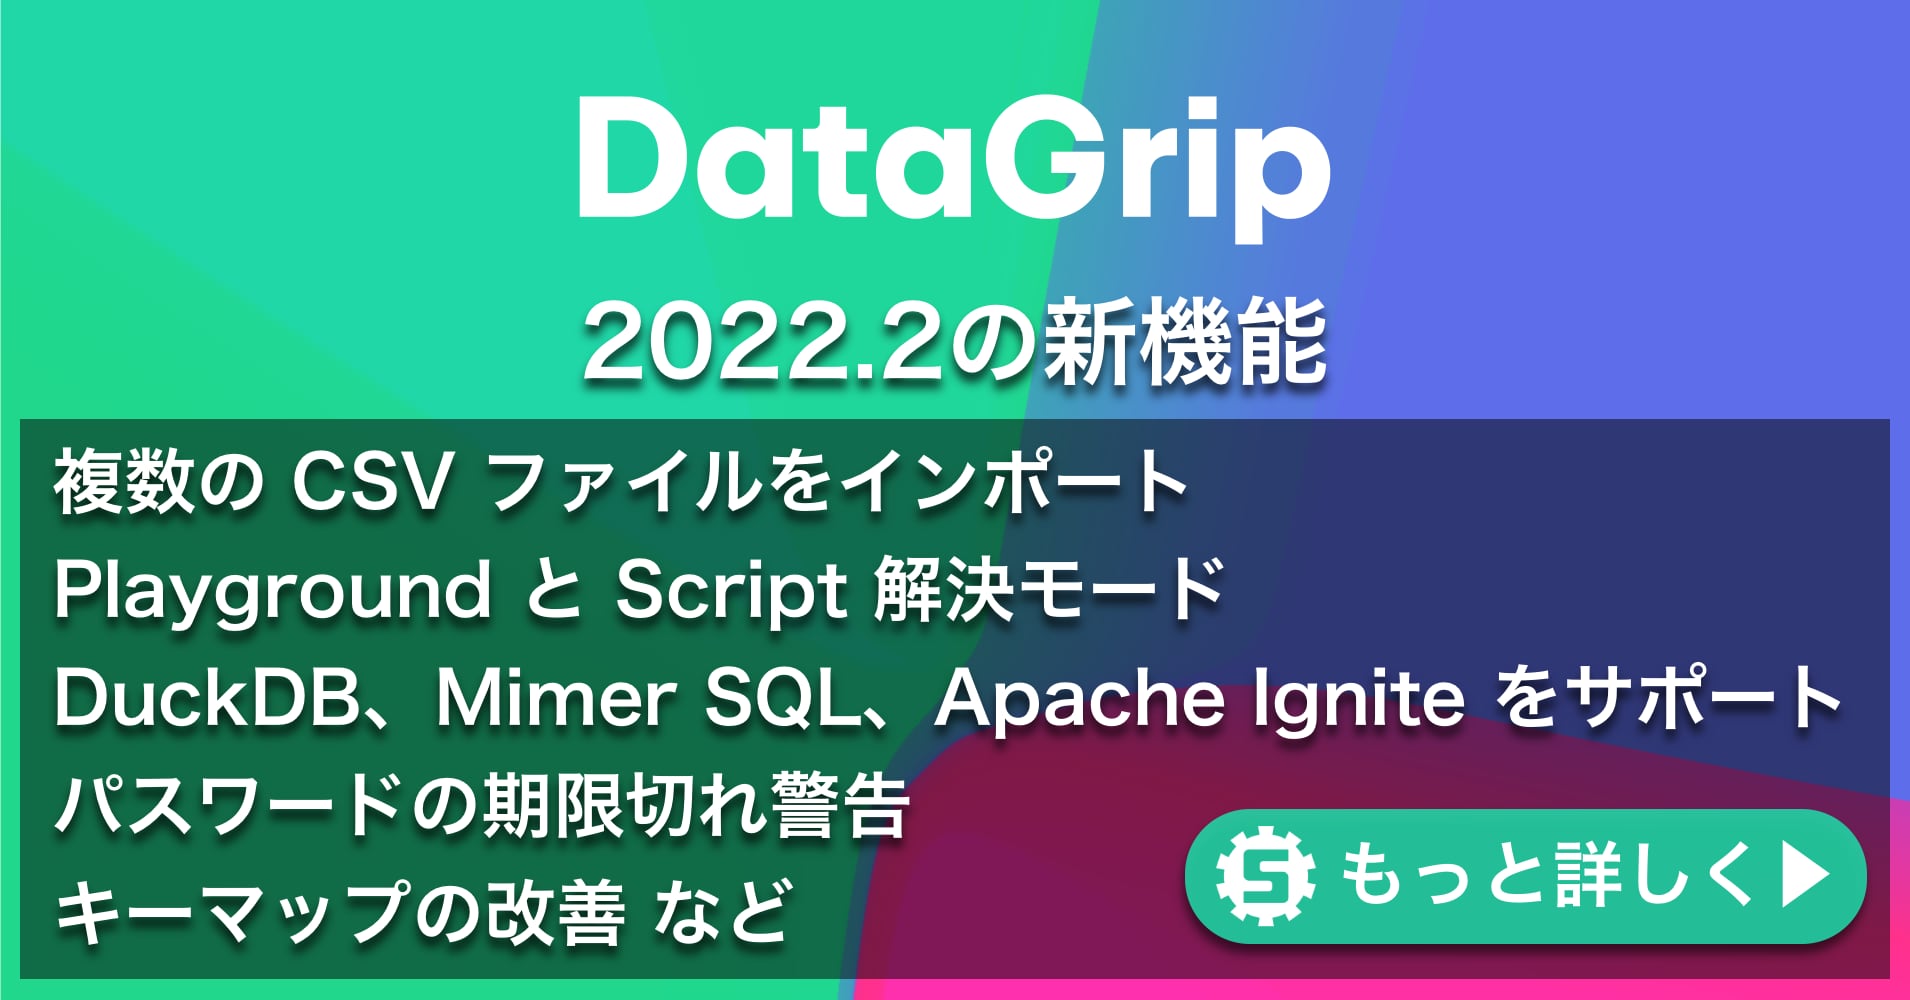 DataGrip 2022.2の新機能